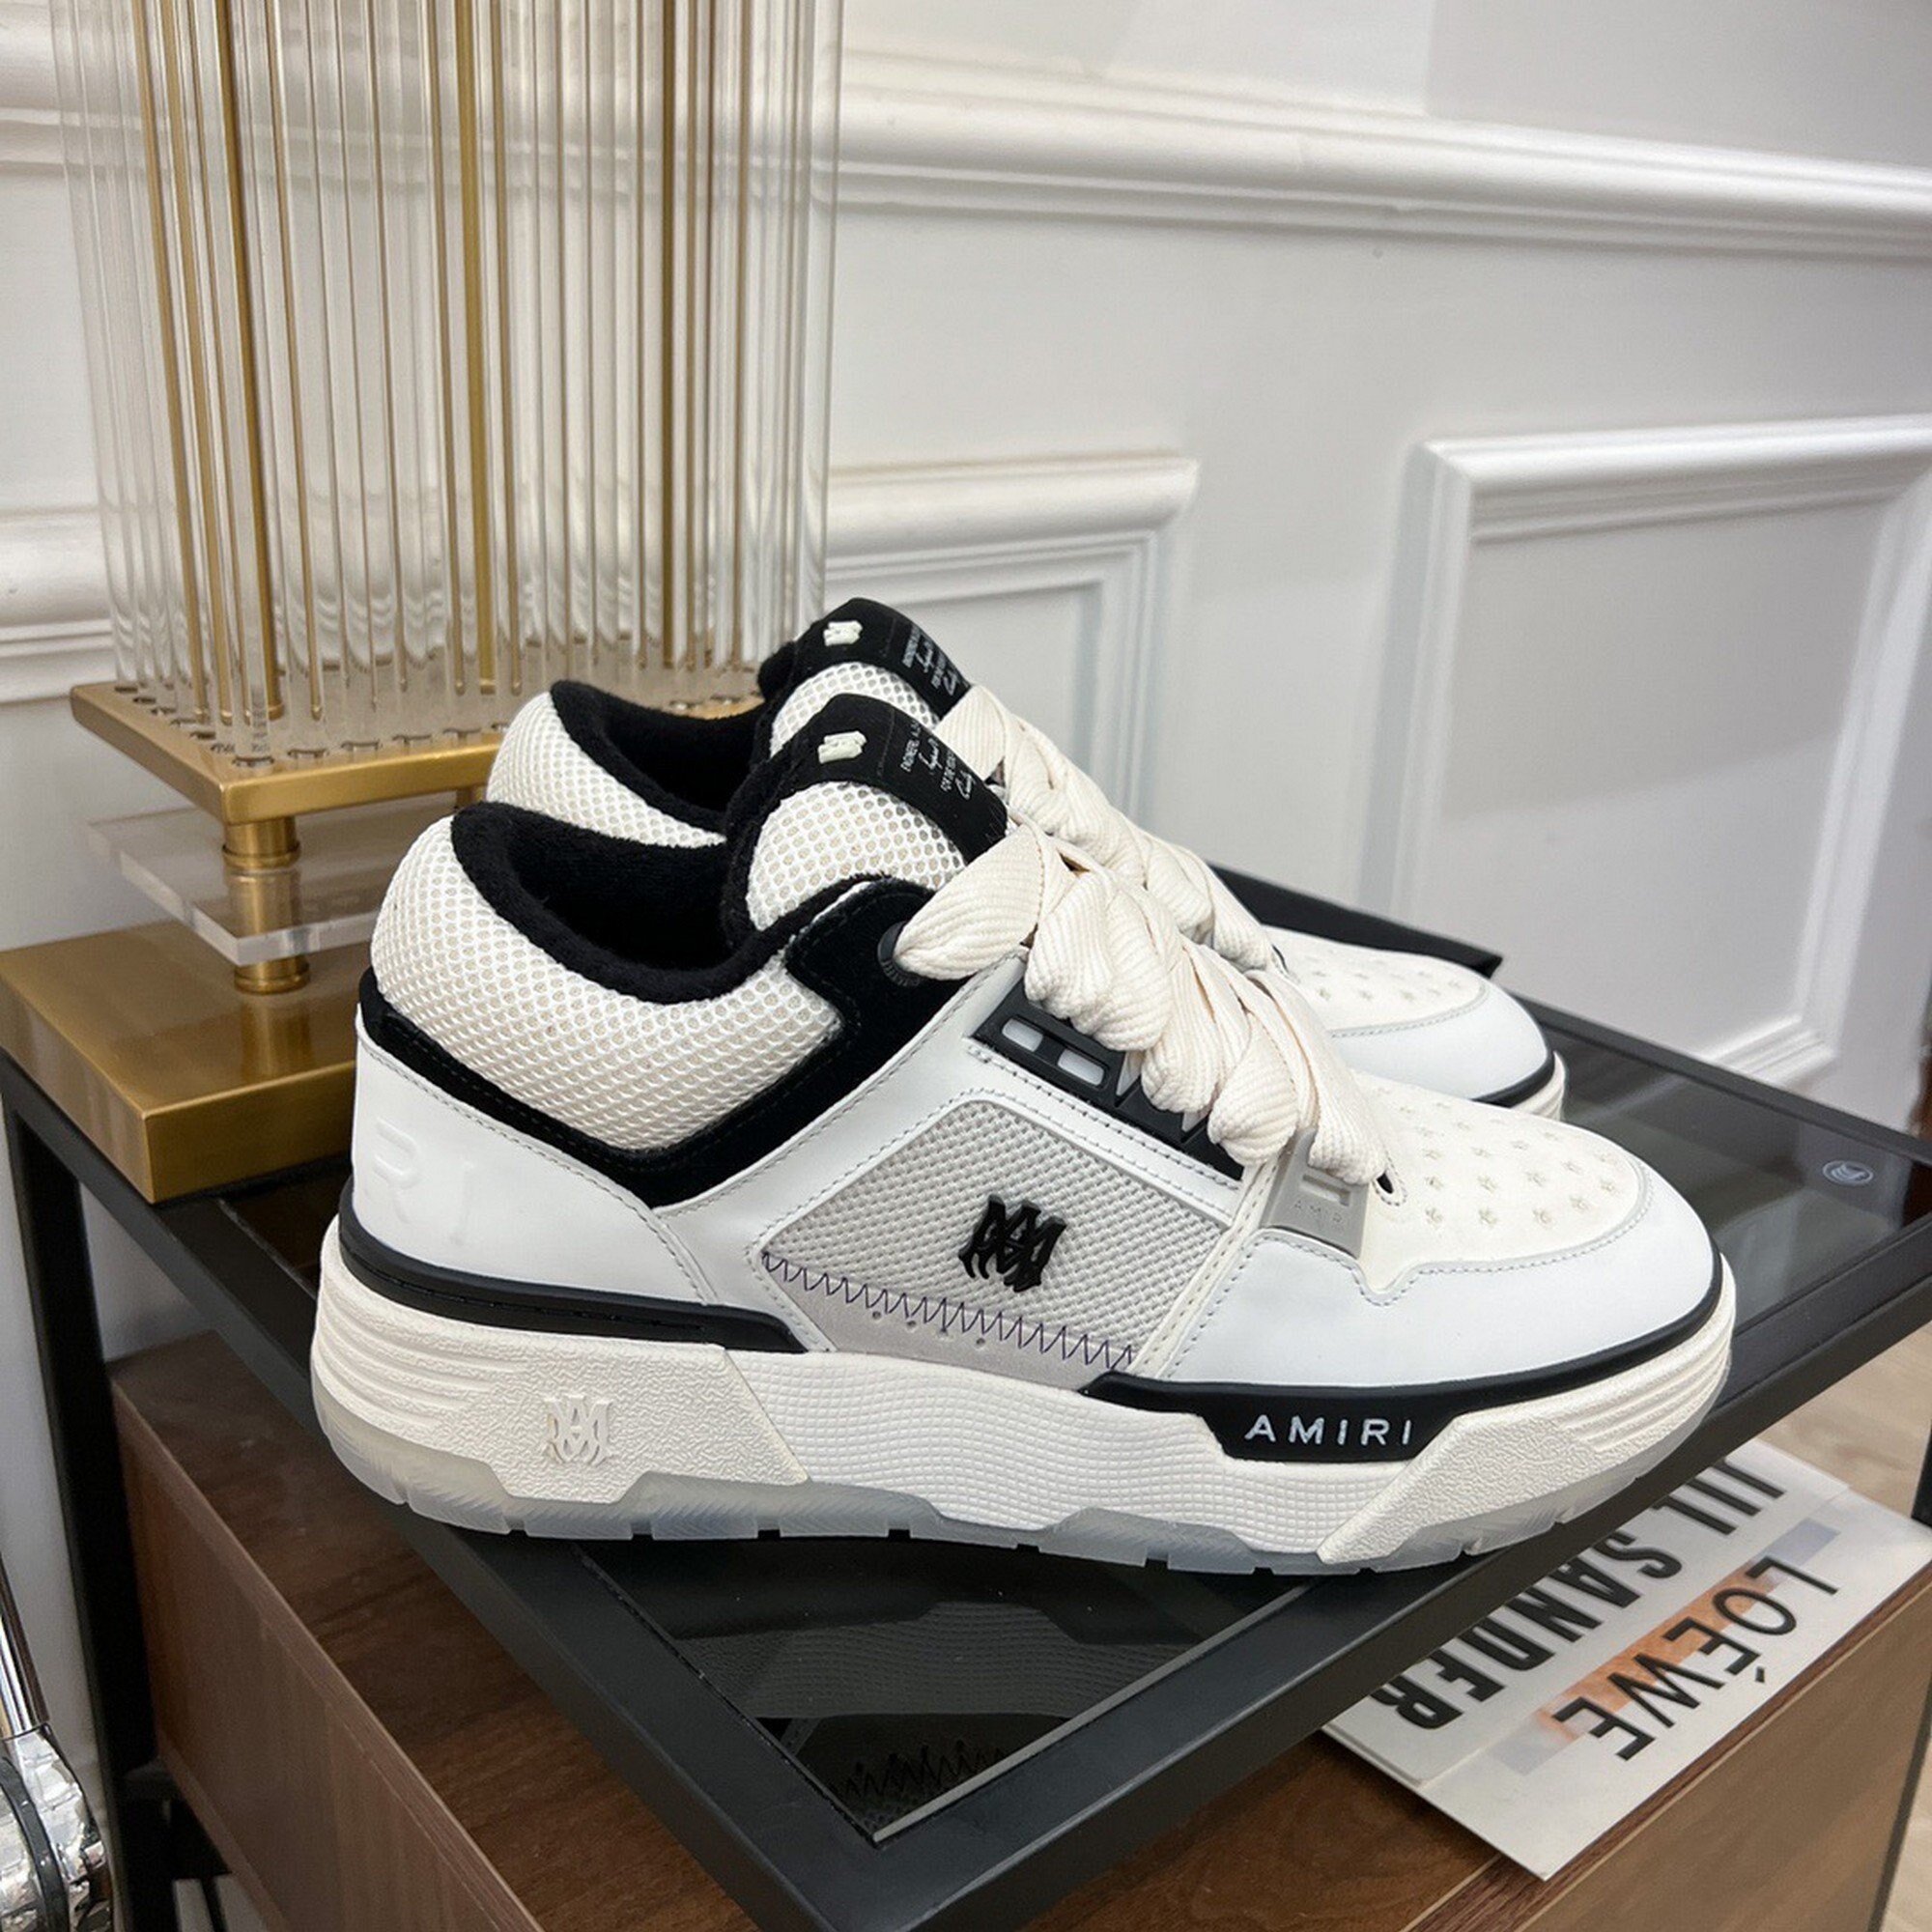 Louis Vuitton Sneakers Men 